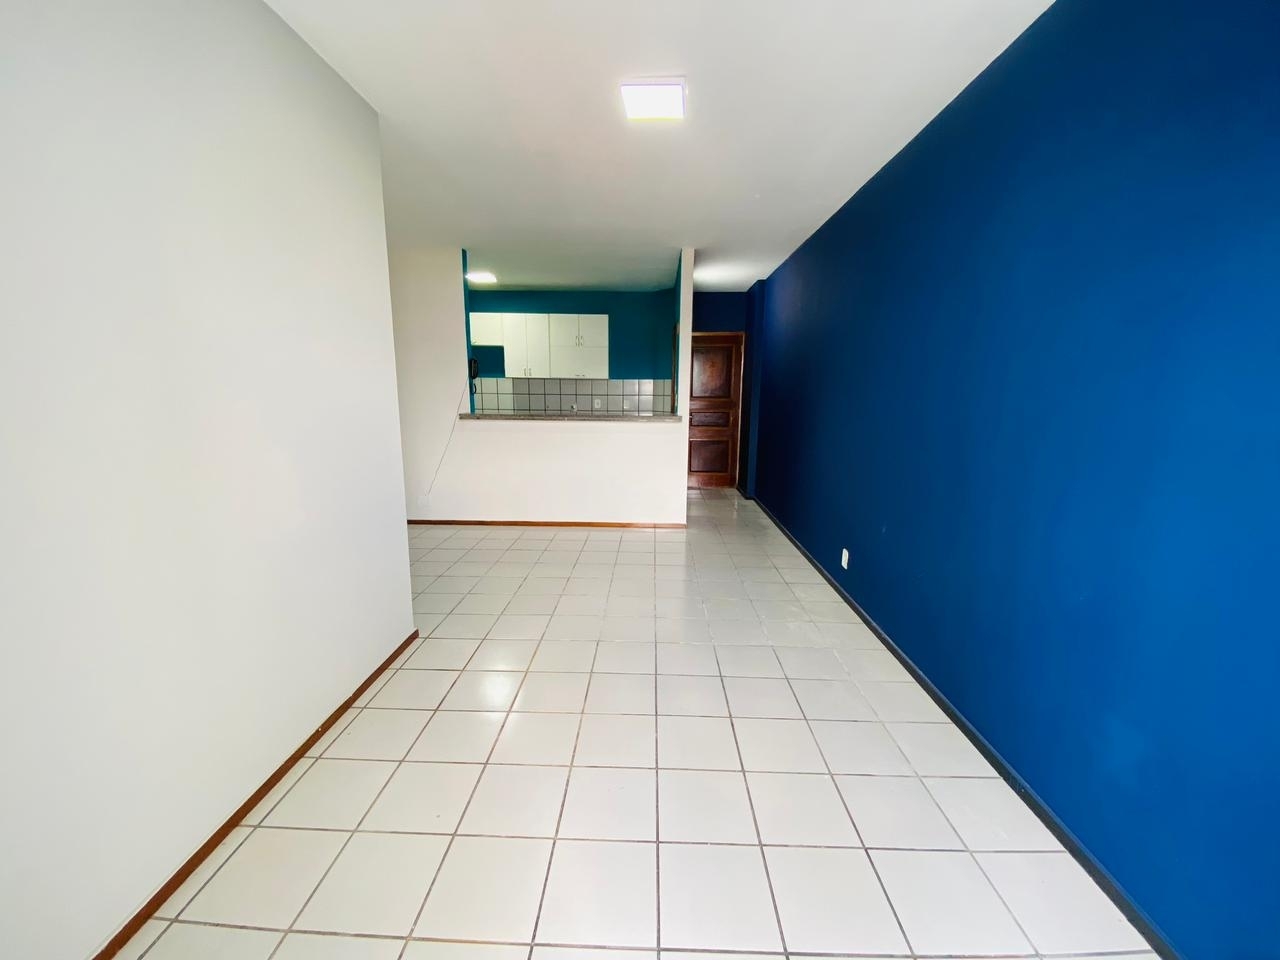 Cobertura, 2 quartos, 70 m² - Foto 2